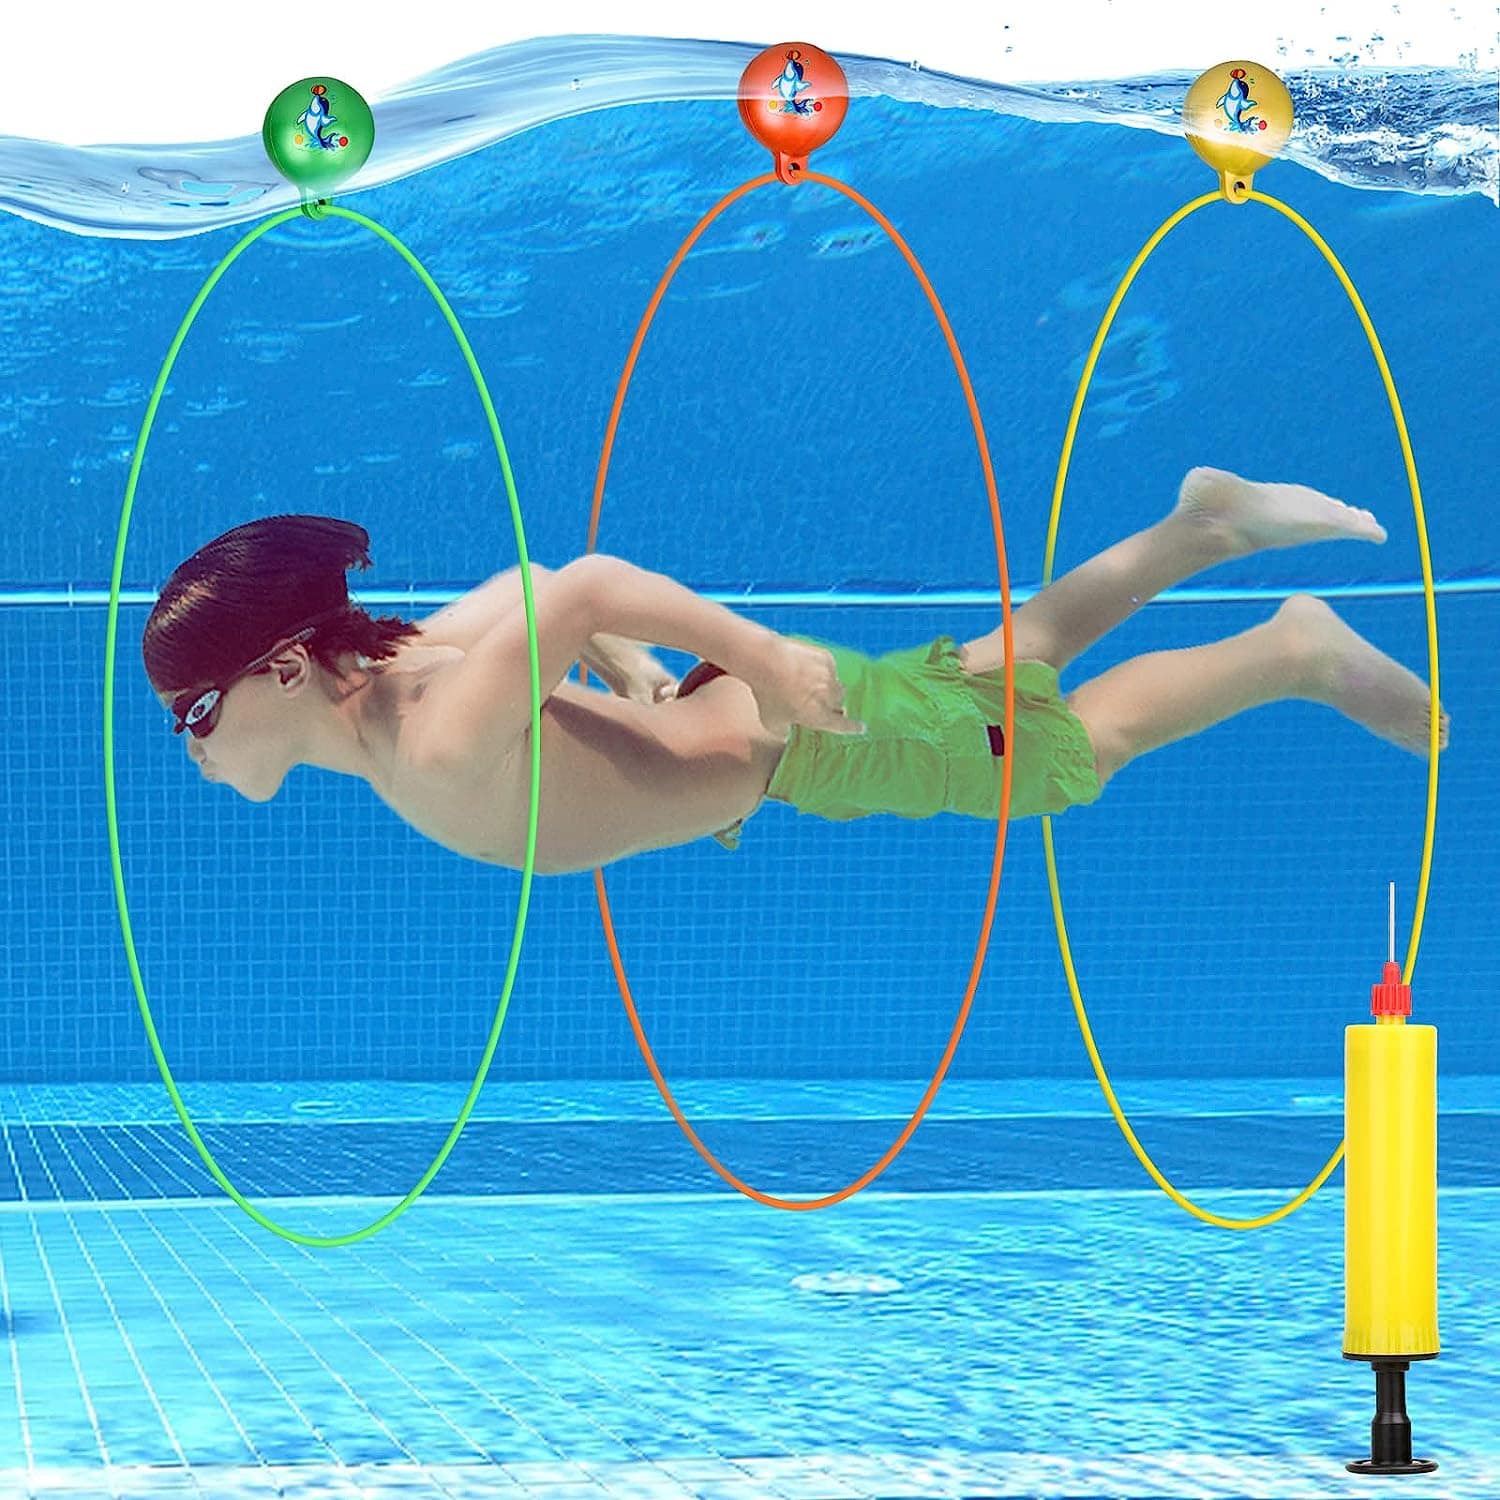 Swim-through pool rings 